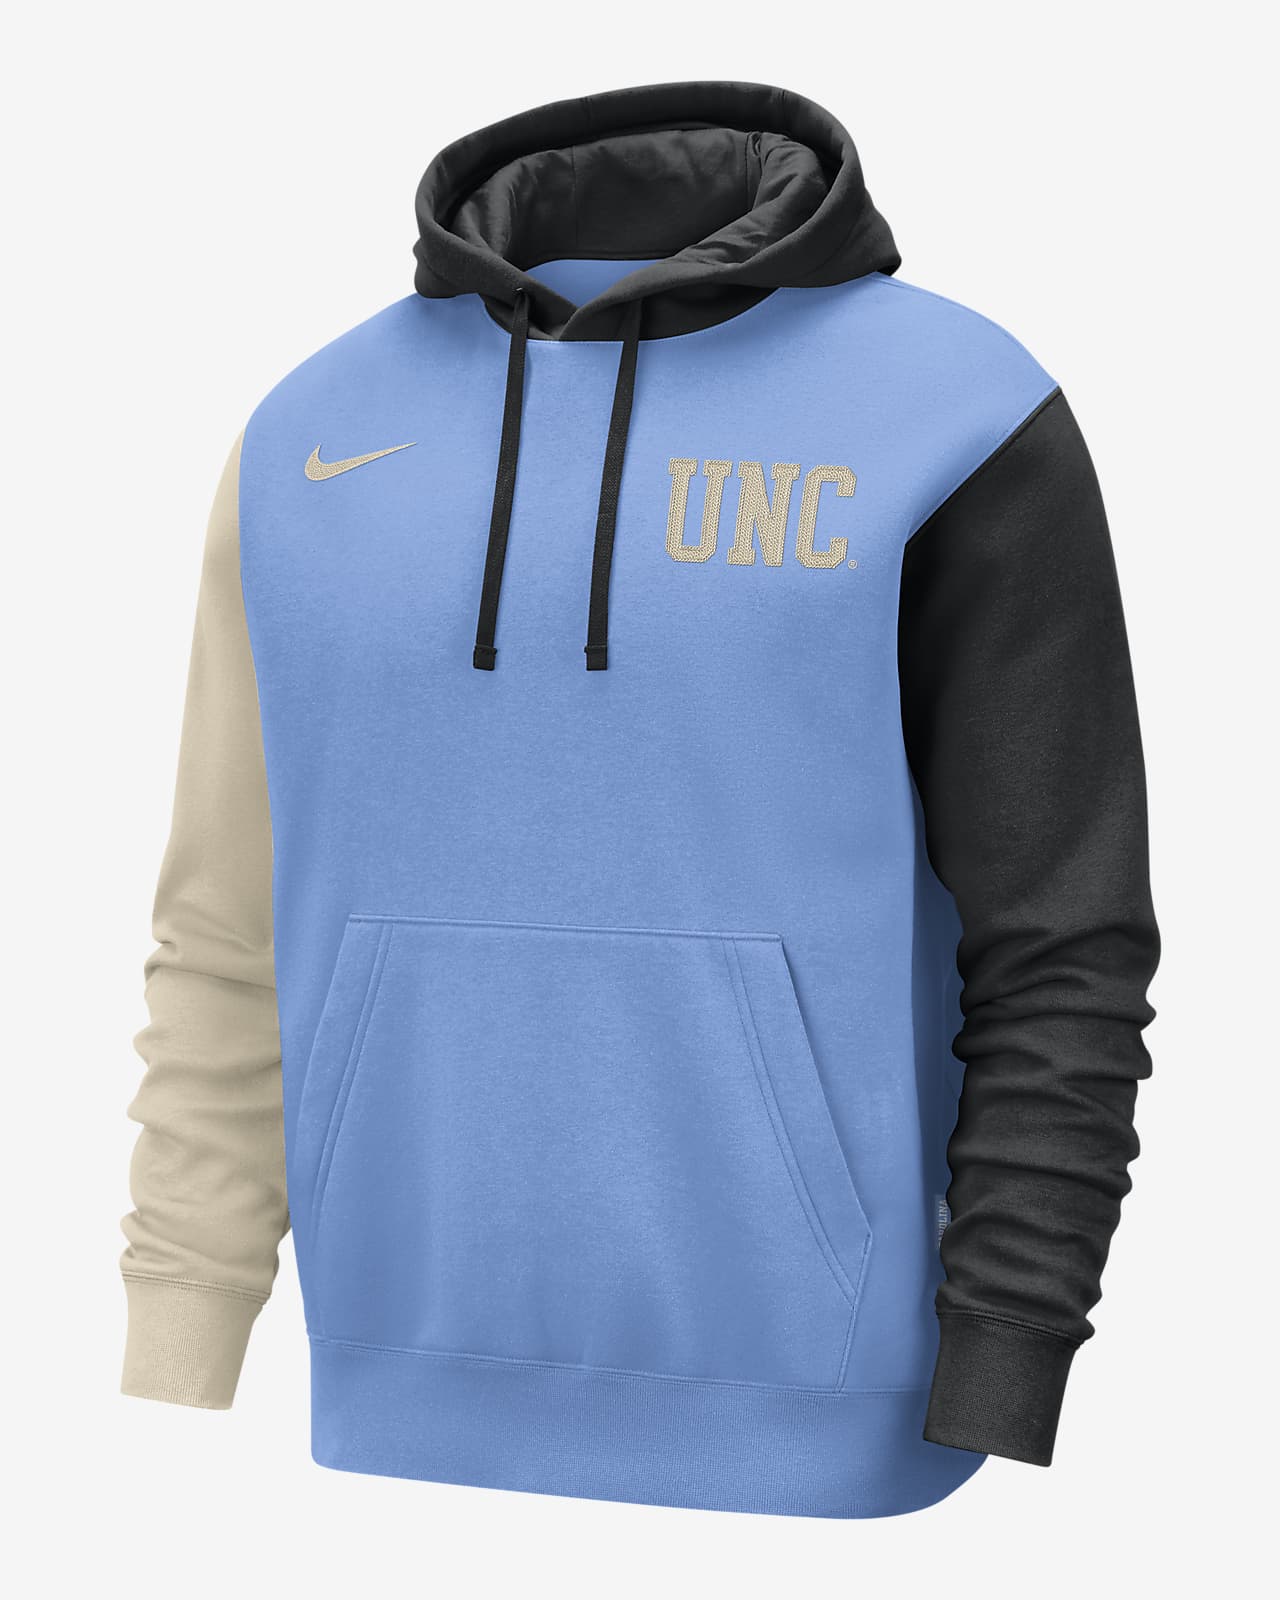 UNC Club Fleece Men's Nike Pullover Hoodie.